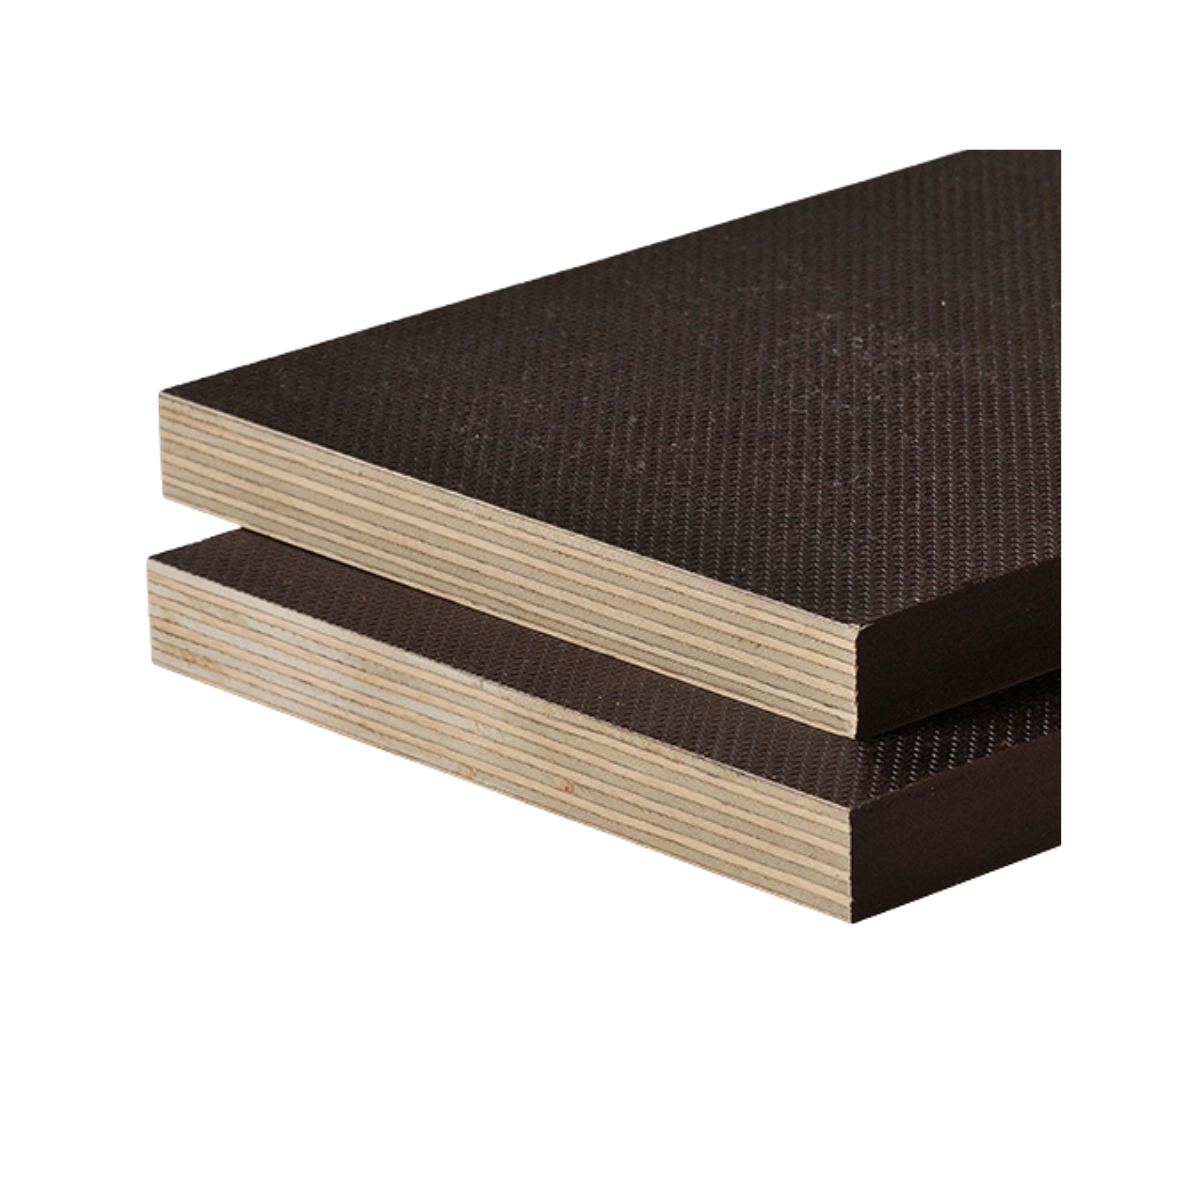 Antiskid playwood - Anti-slip TEGO formwork plywood 15 mm thickness, 1250 x 2500 mm class B, https:maxbau.ro